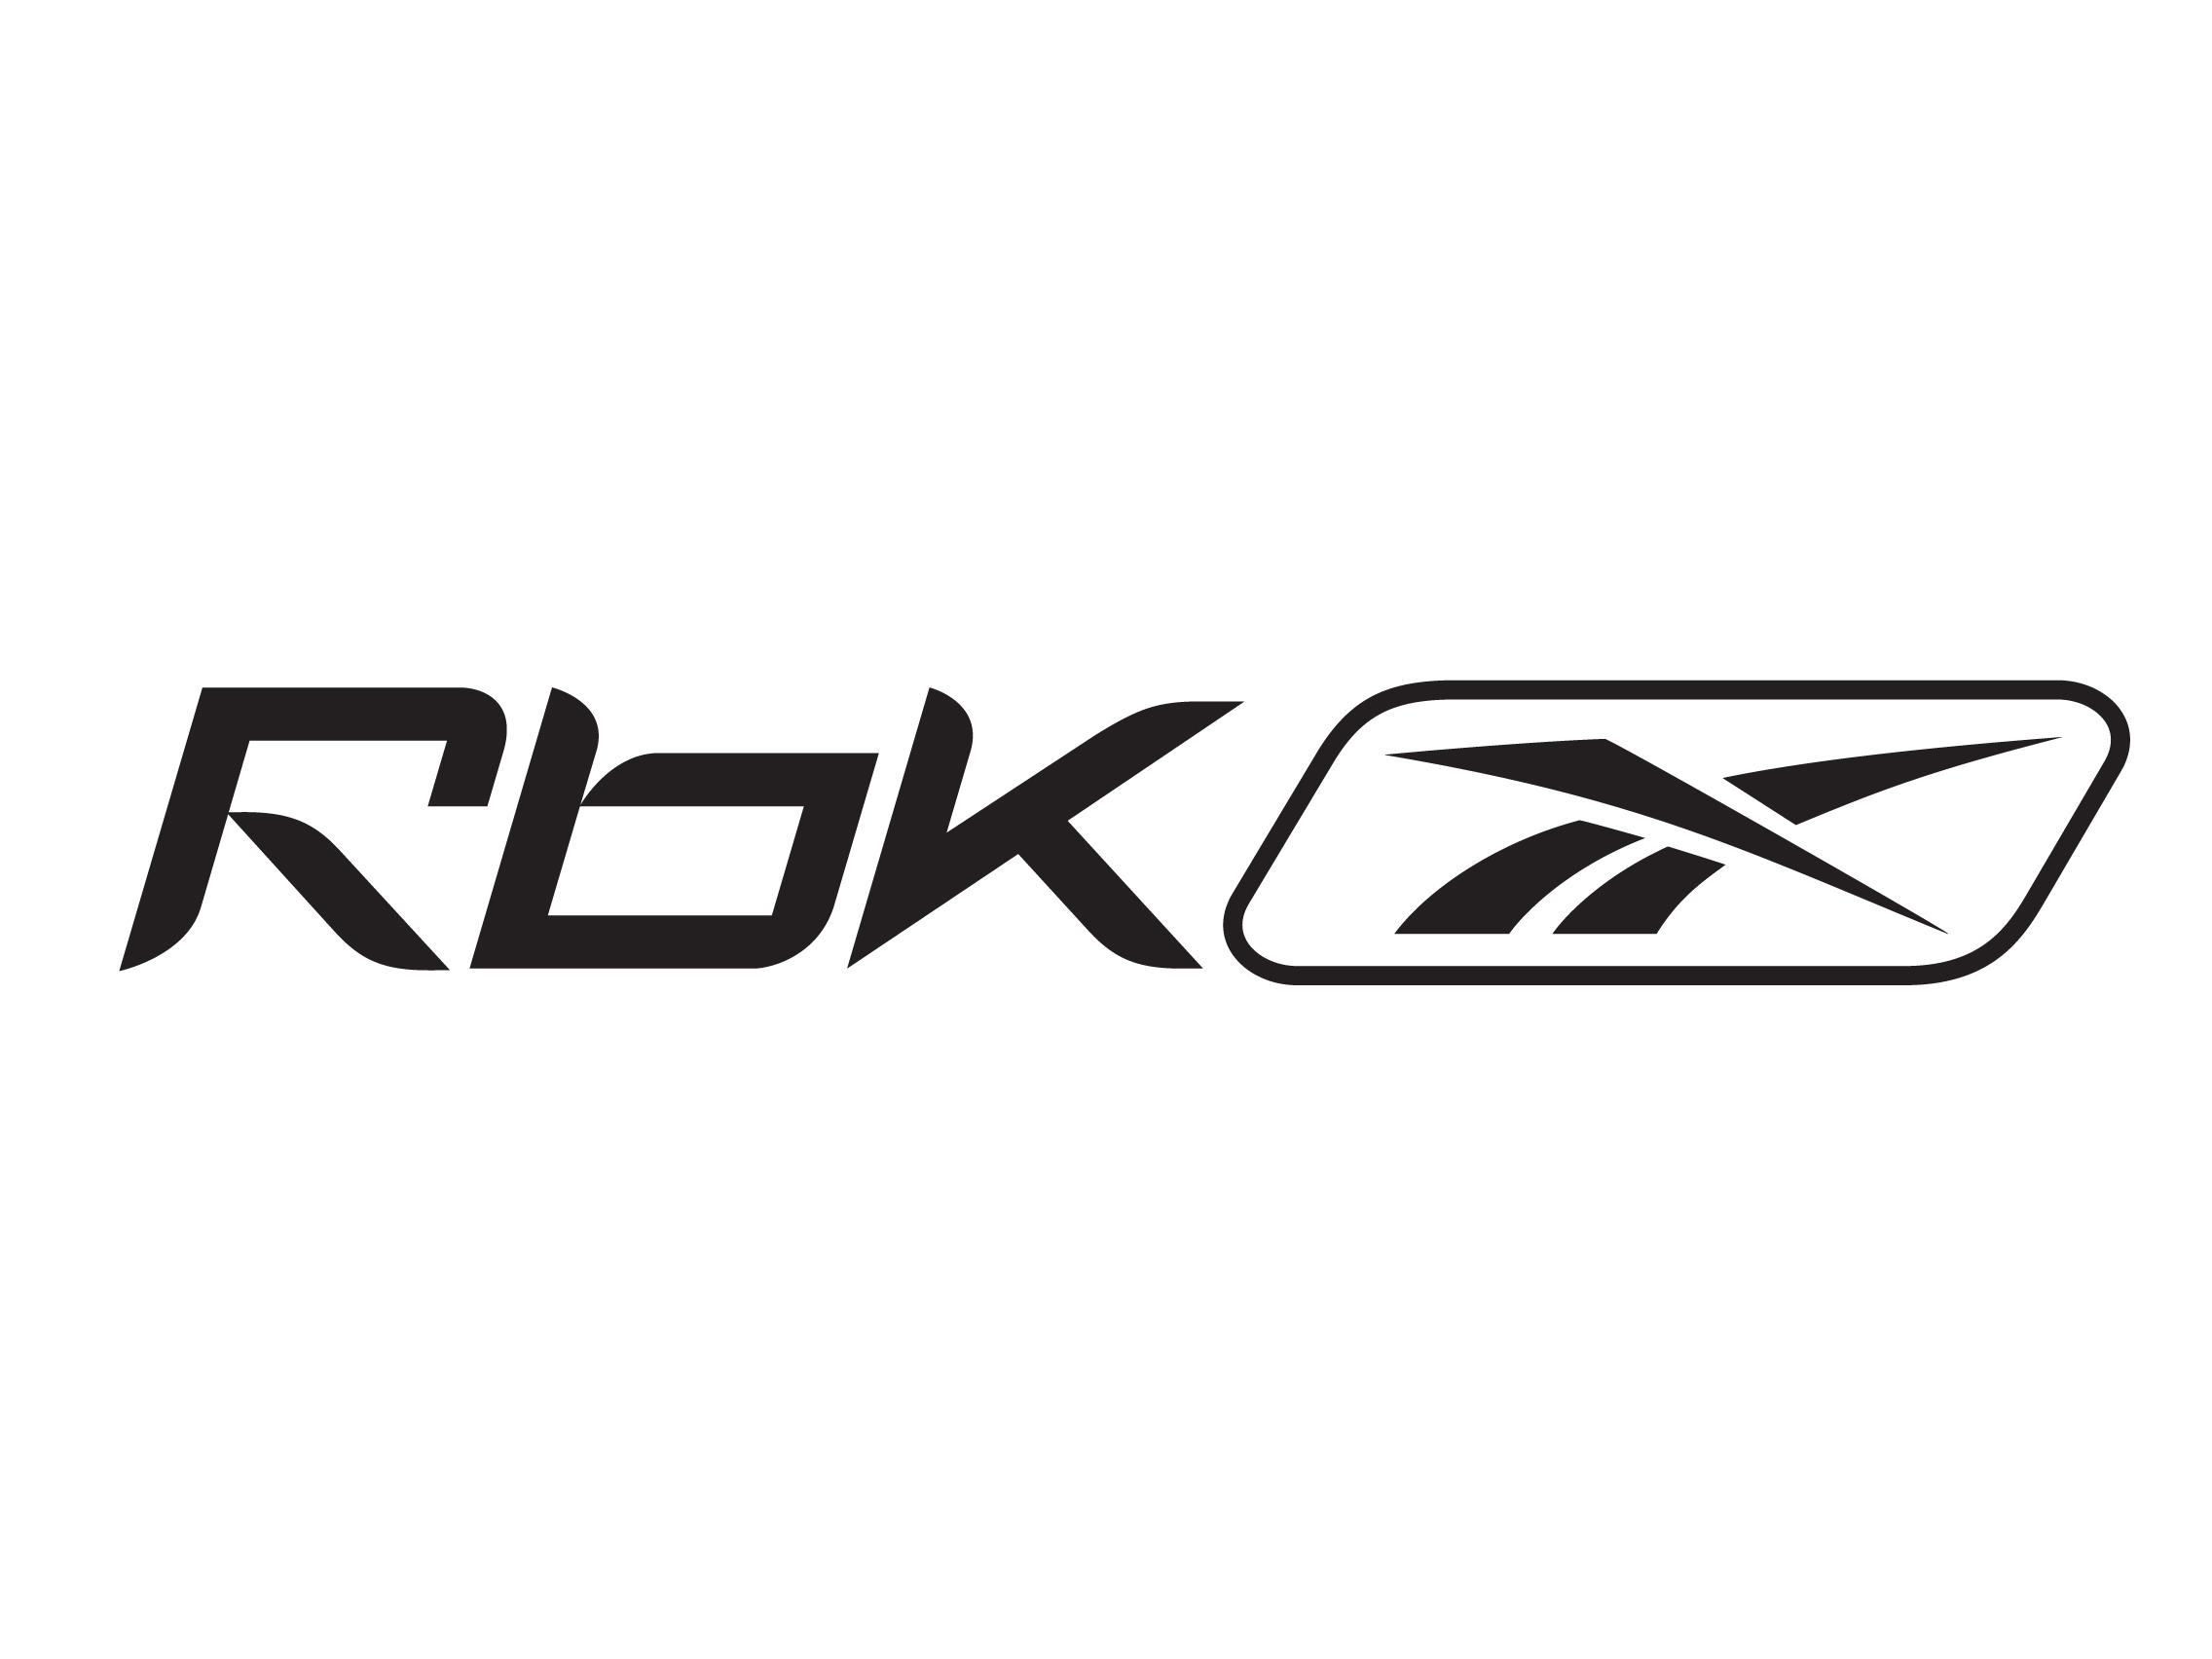 Reebok Redesigned Logo Image